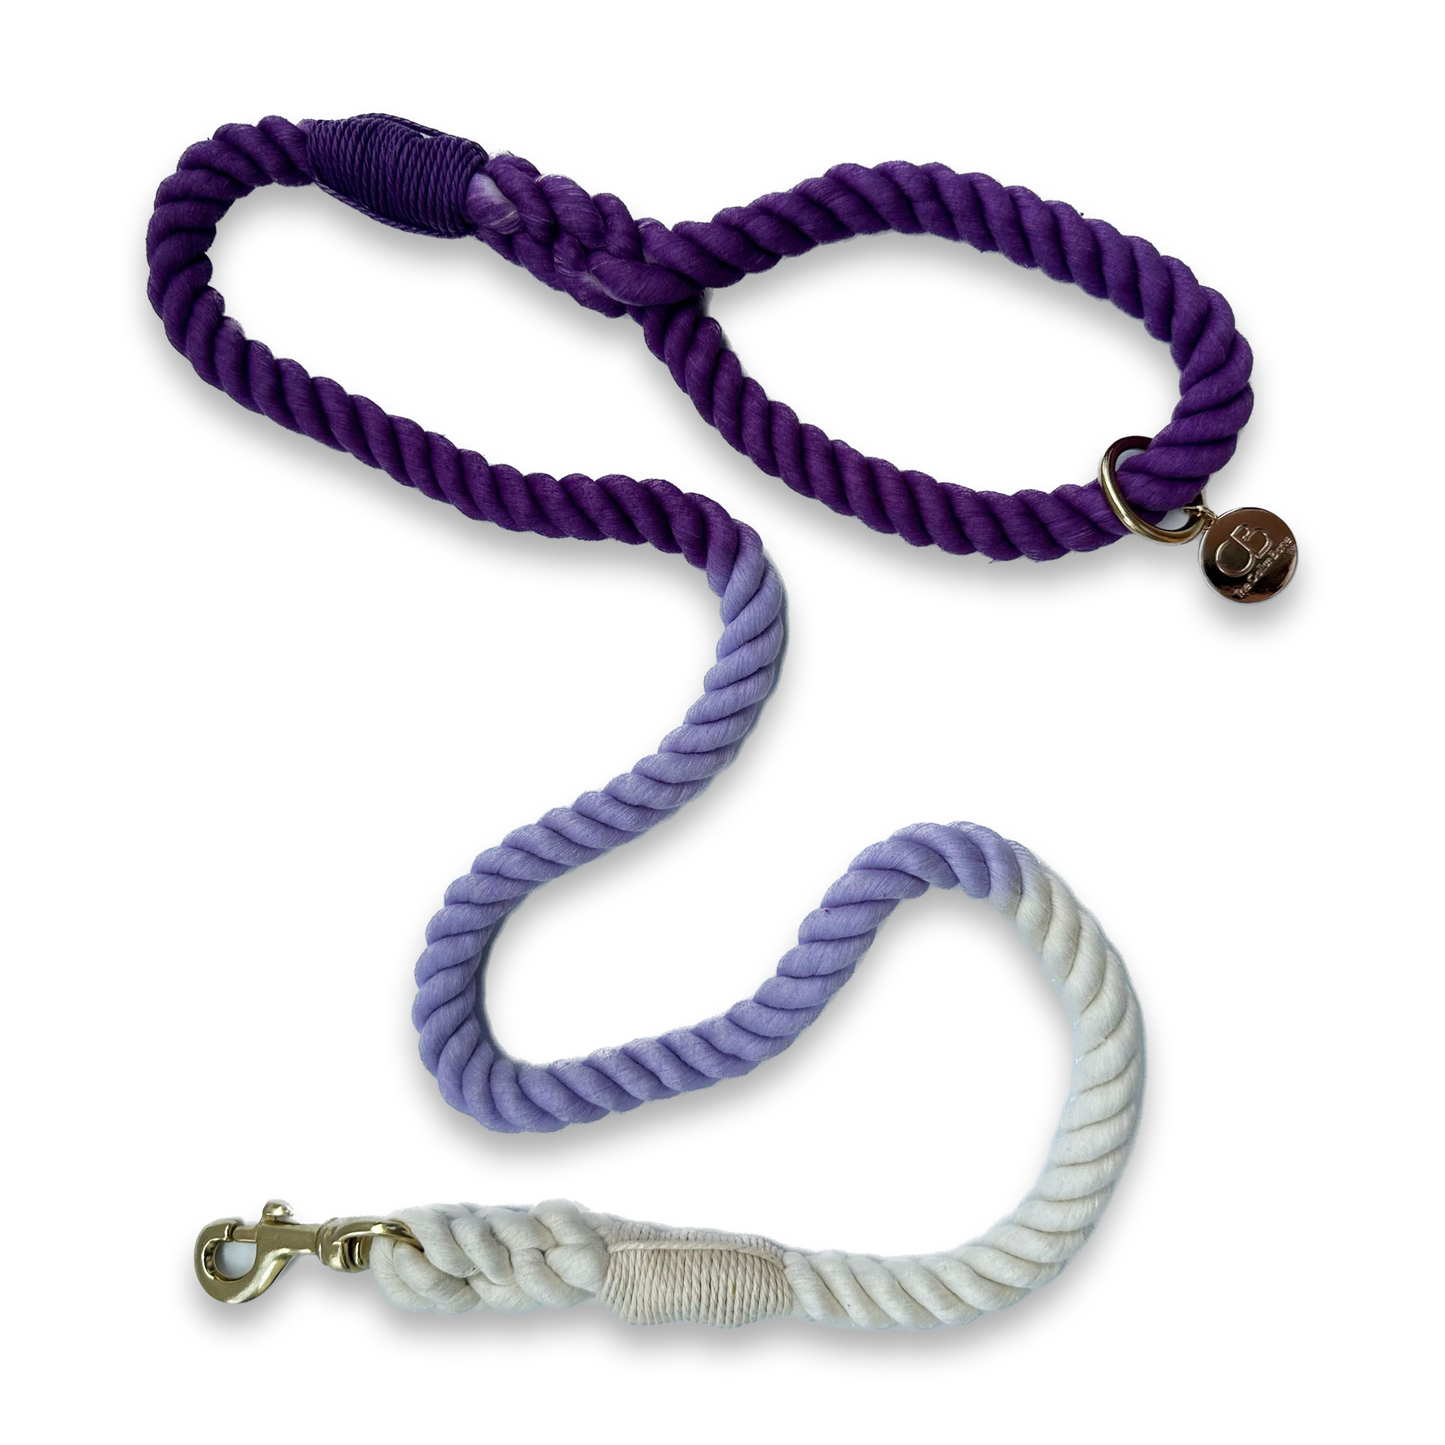 Koko Rope Leash in Ombré Purple & White